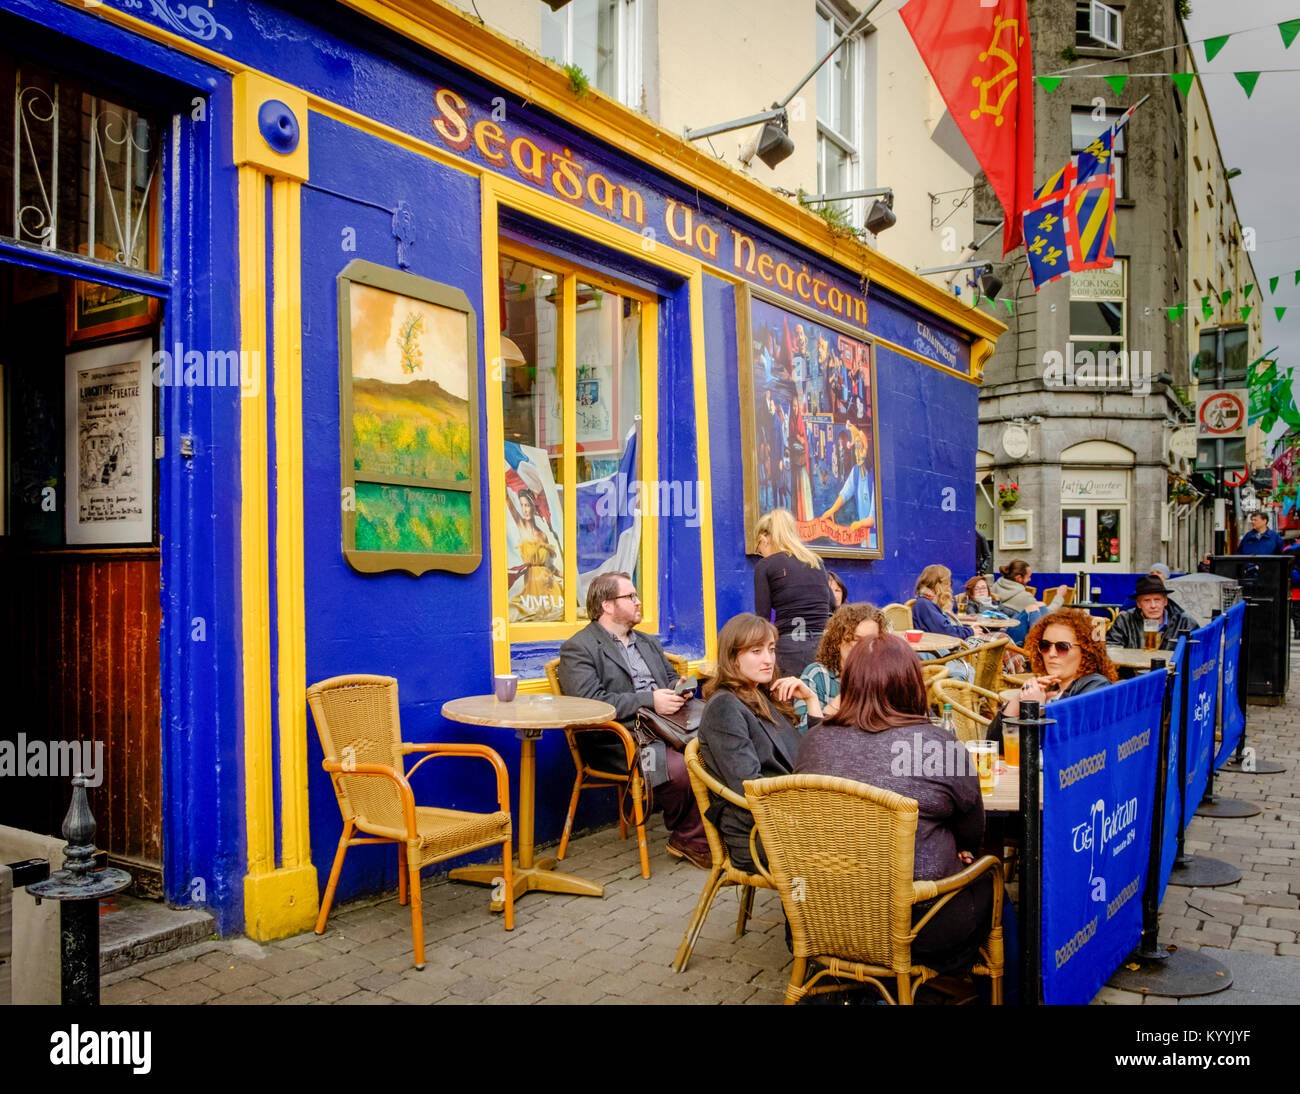 Neactain Pub on the High Street in Galway, Ireland Stock Photo